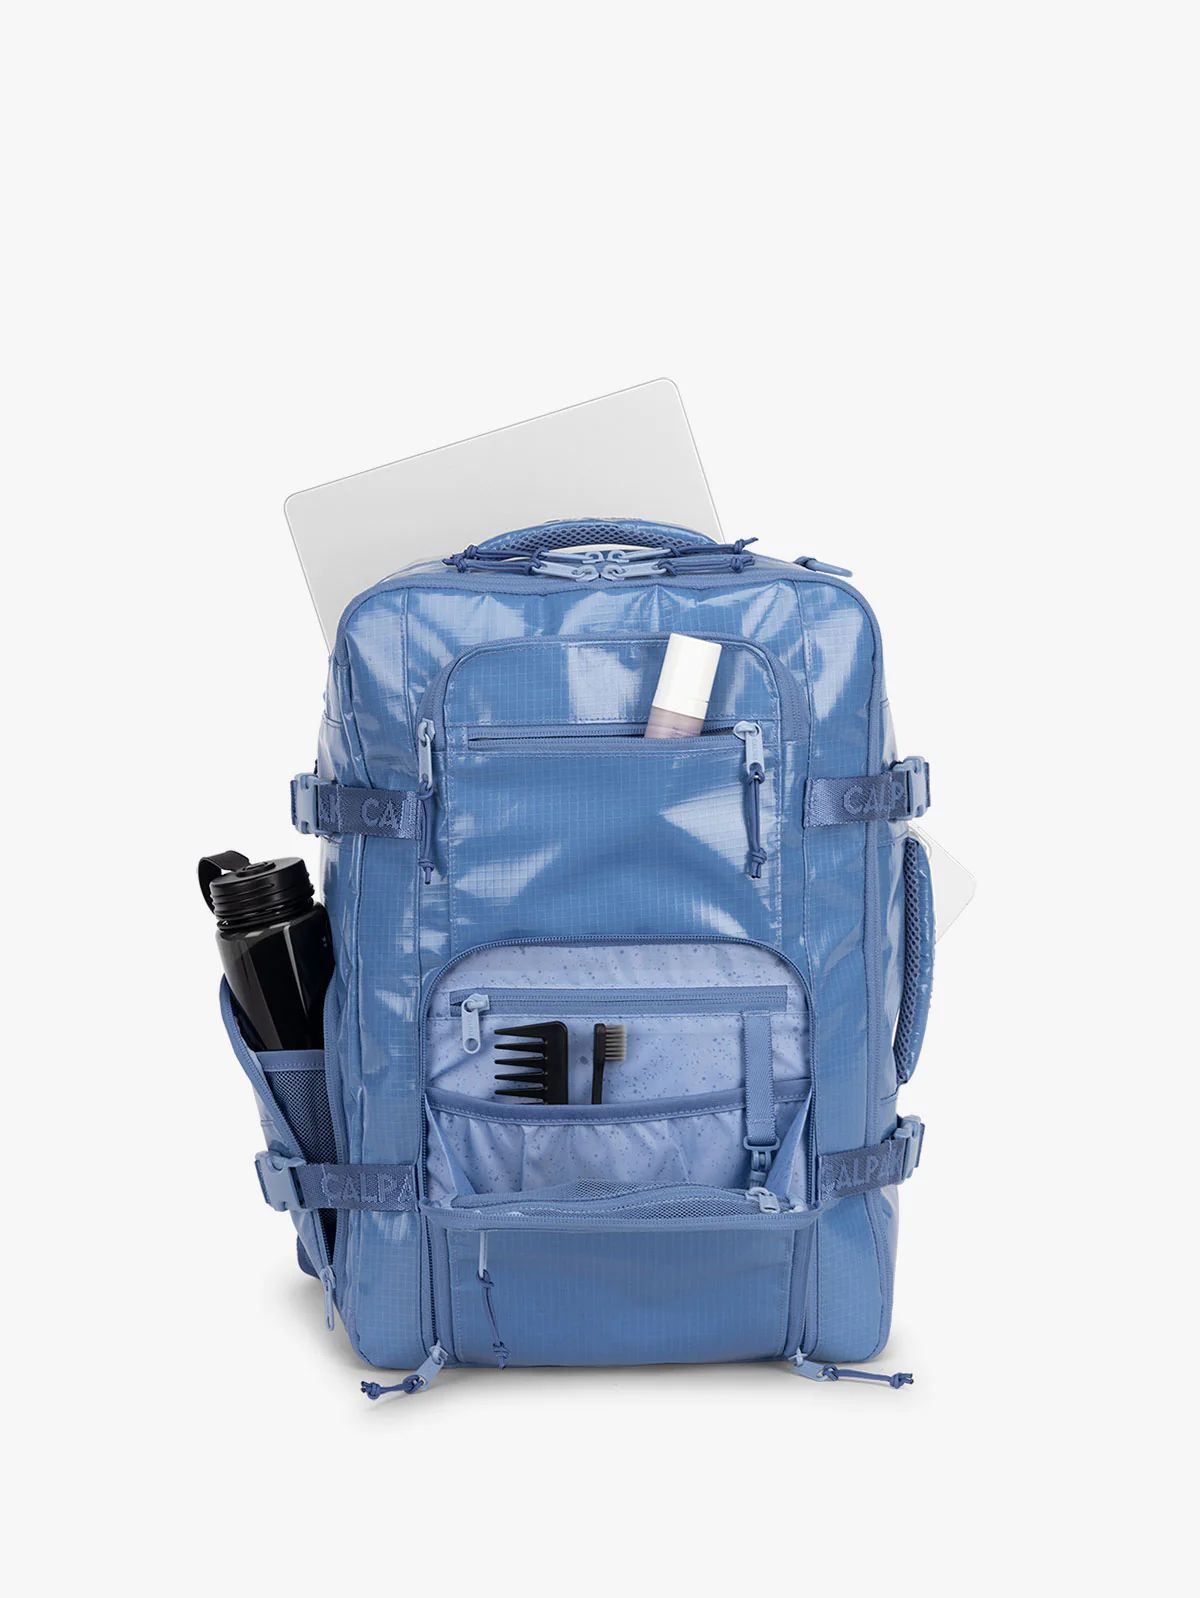 Terra 26L Laptop Backpack Duffel | CALPAK | CALPAK Travel